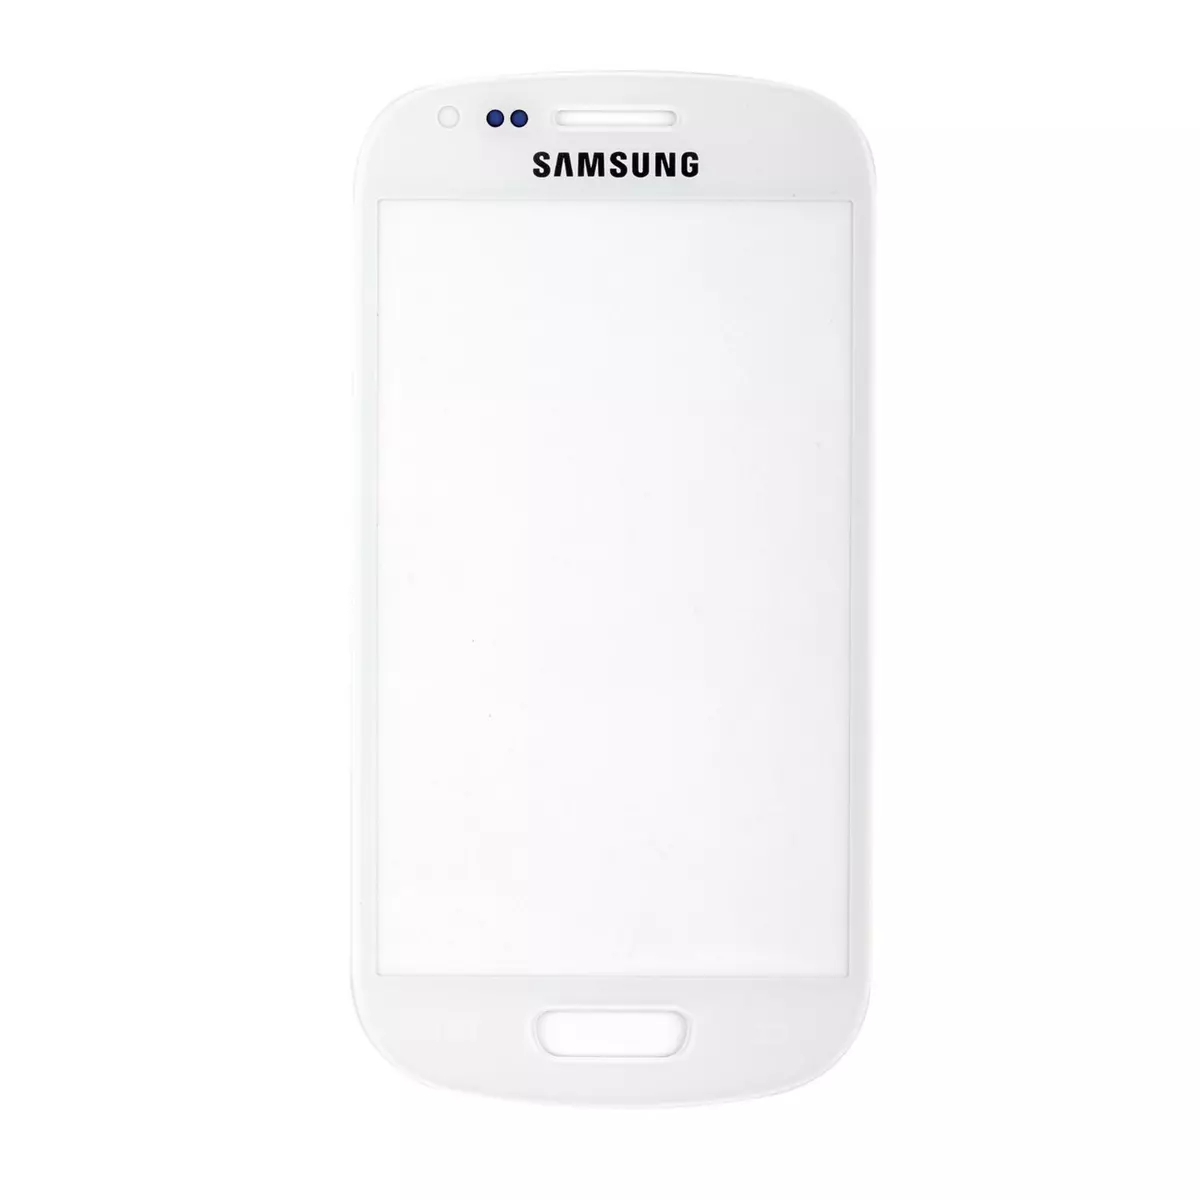 Samsung Vitre écran de façade blanche + adhésif pour Samsung Galaxy S3 mini I8190